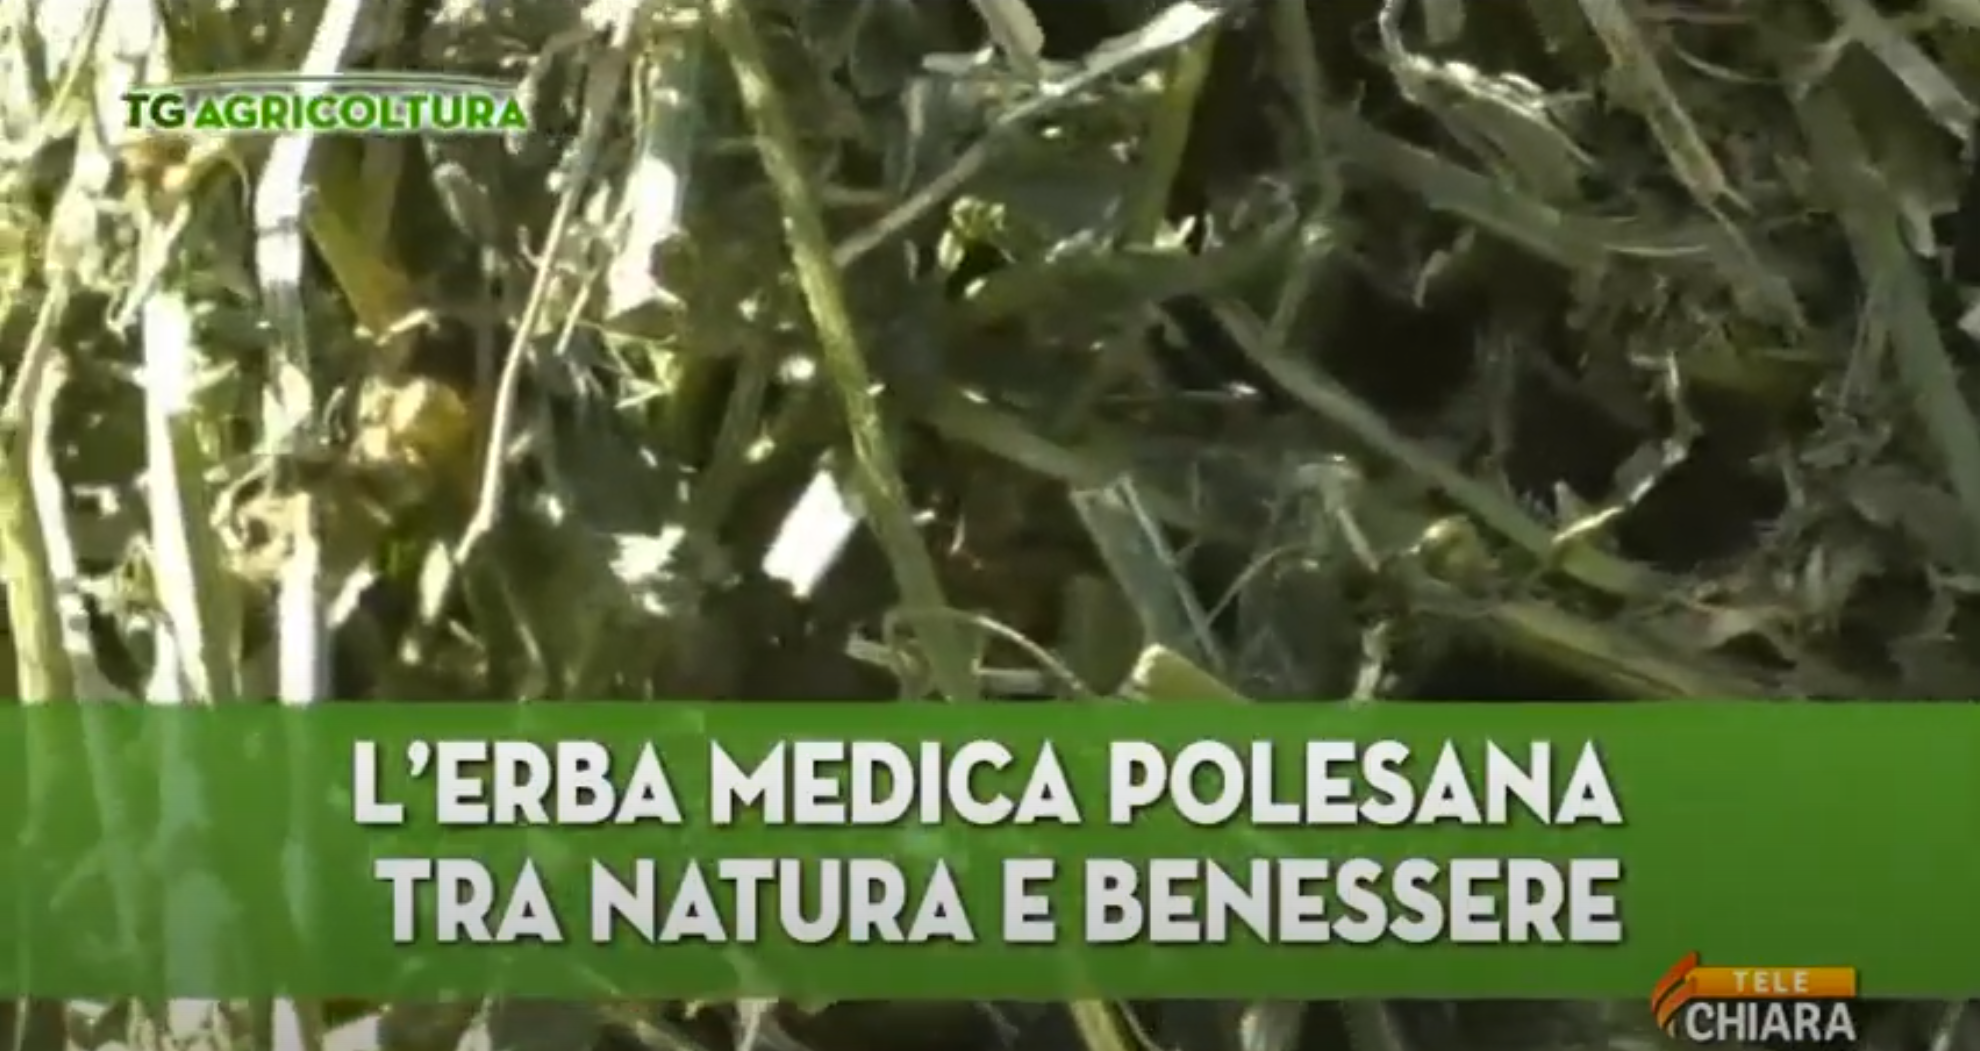 POLESINE ALFALFA BETWEEN NATURE AND WELL-BEING